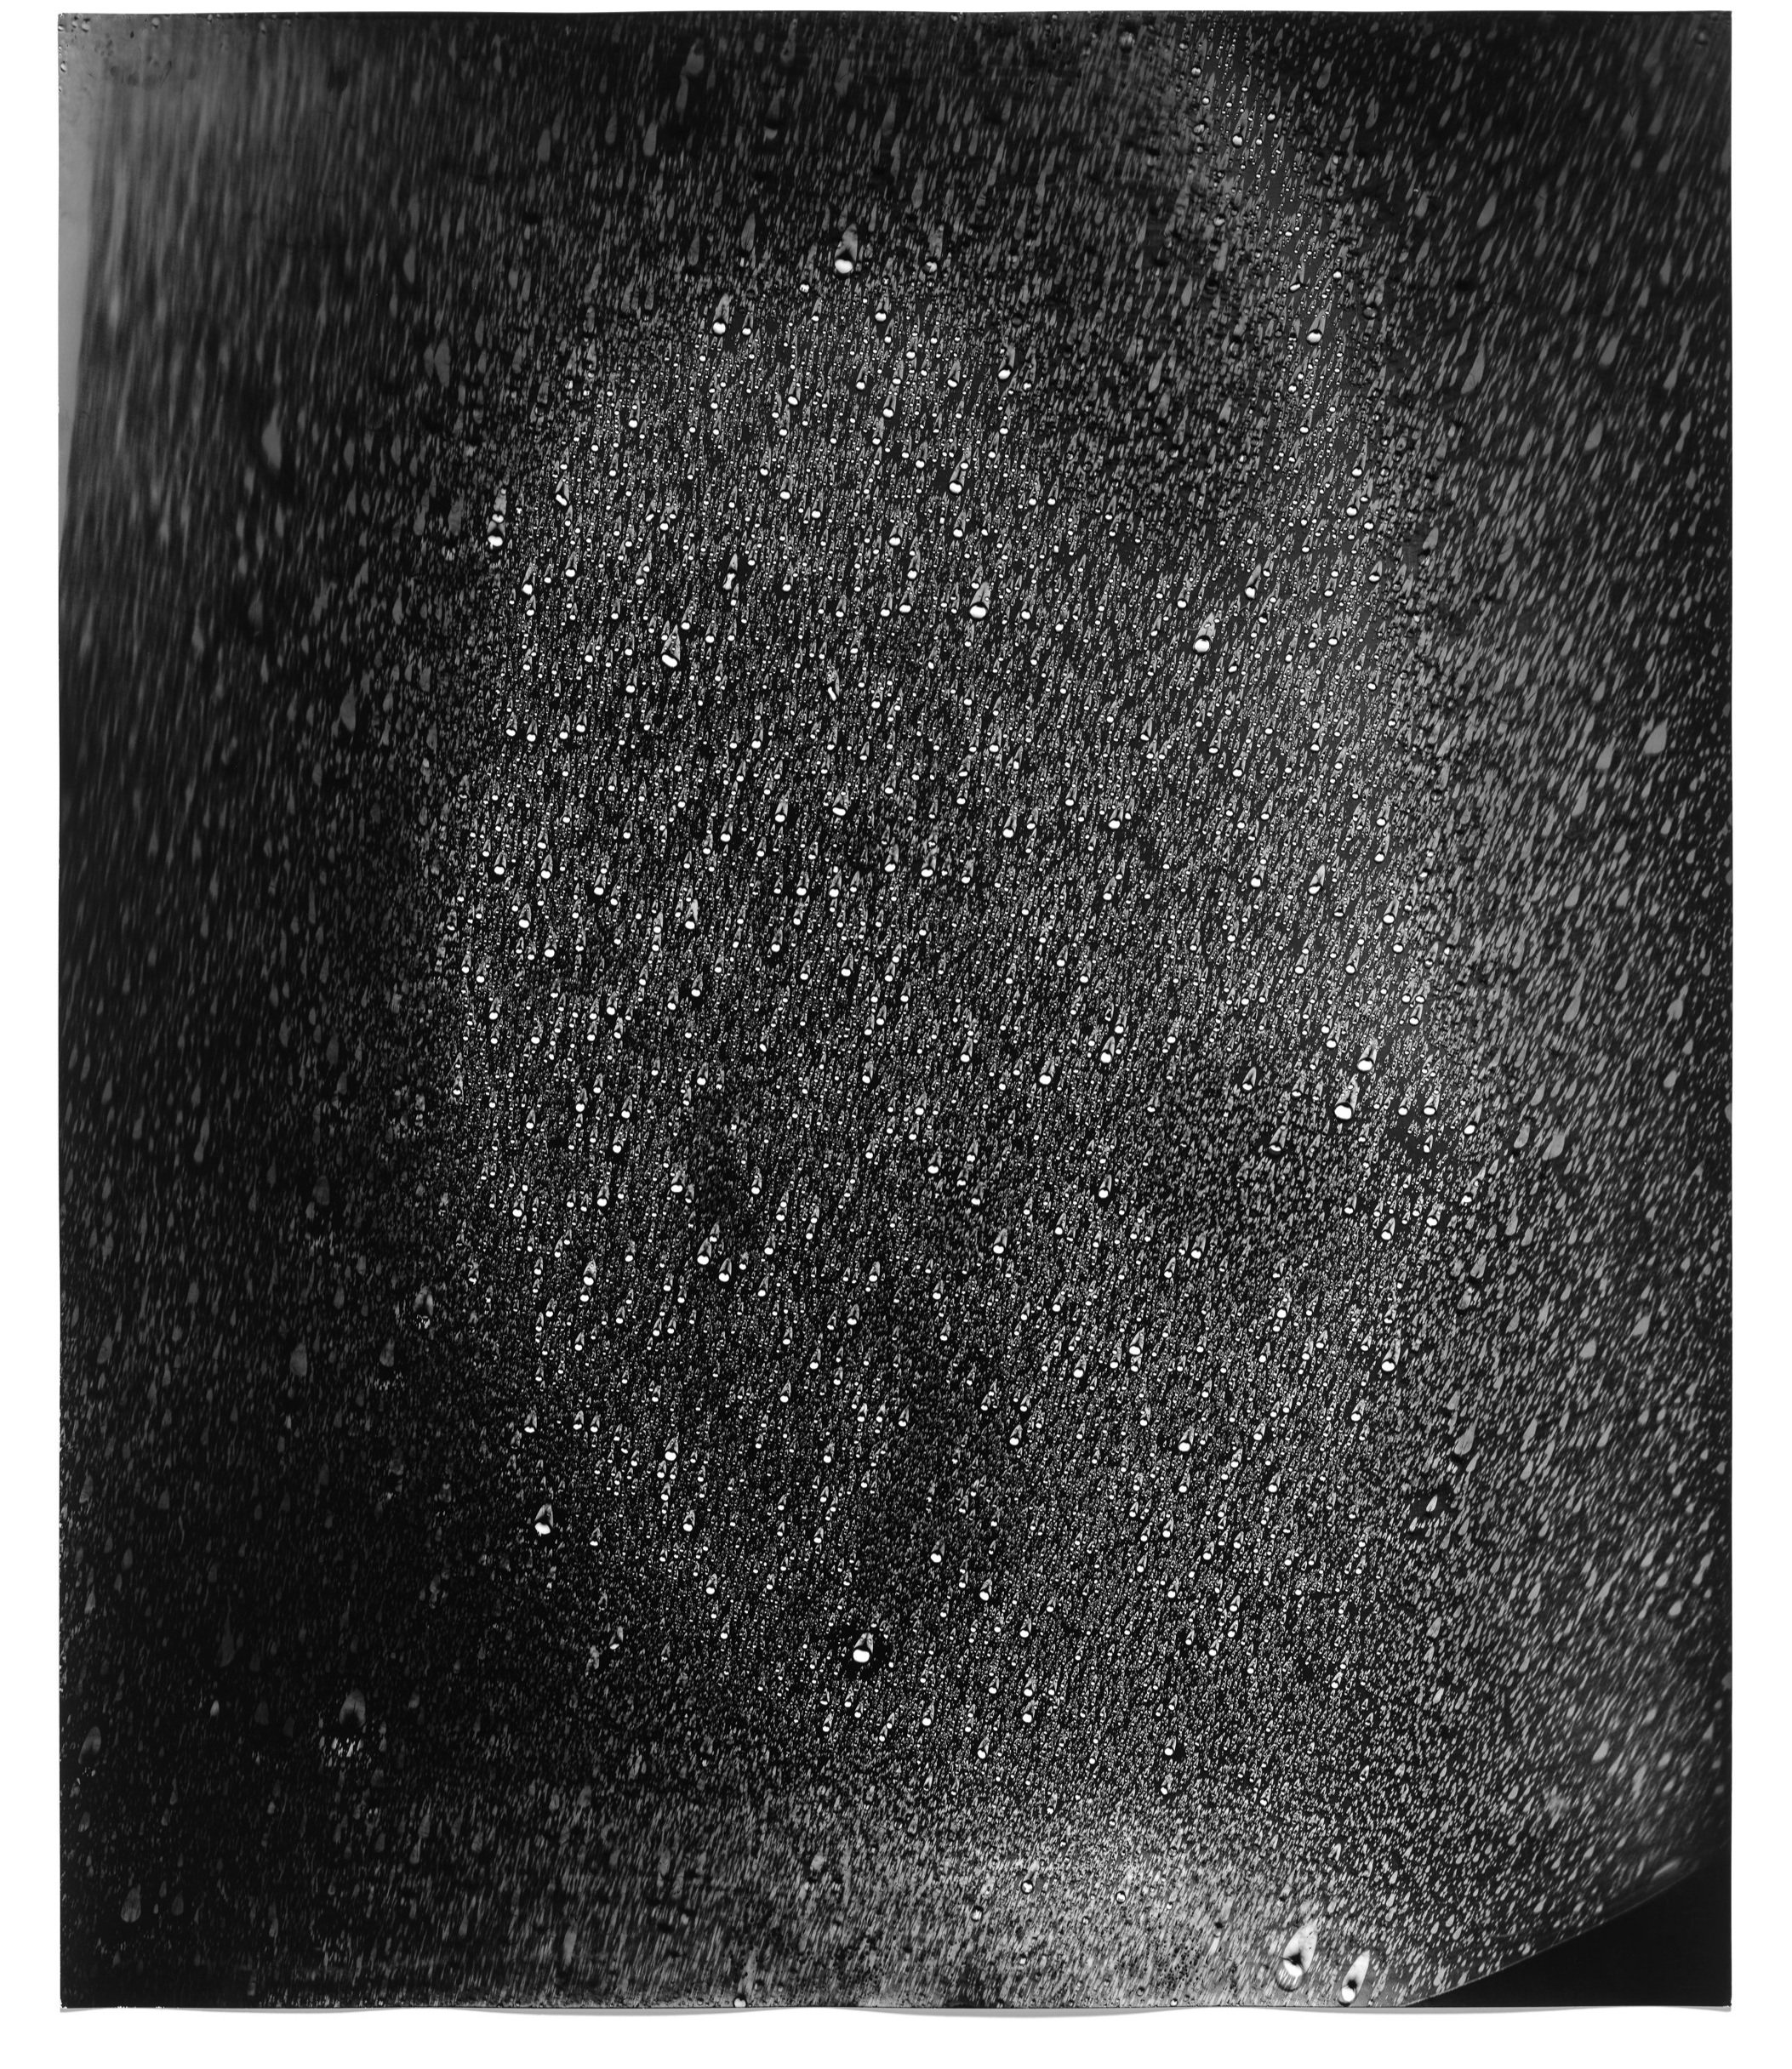   Rain Study (Kona 7),  2014   Silver gelatin photogram 24 x 20 in 